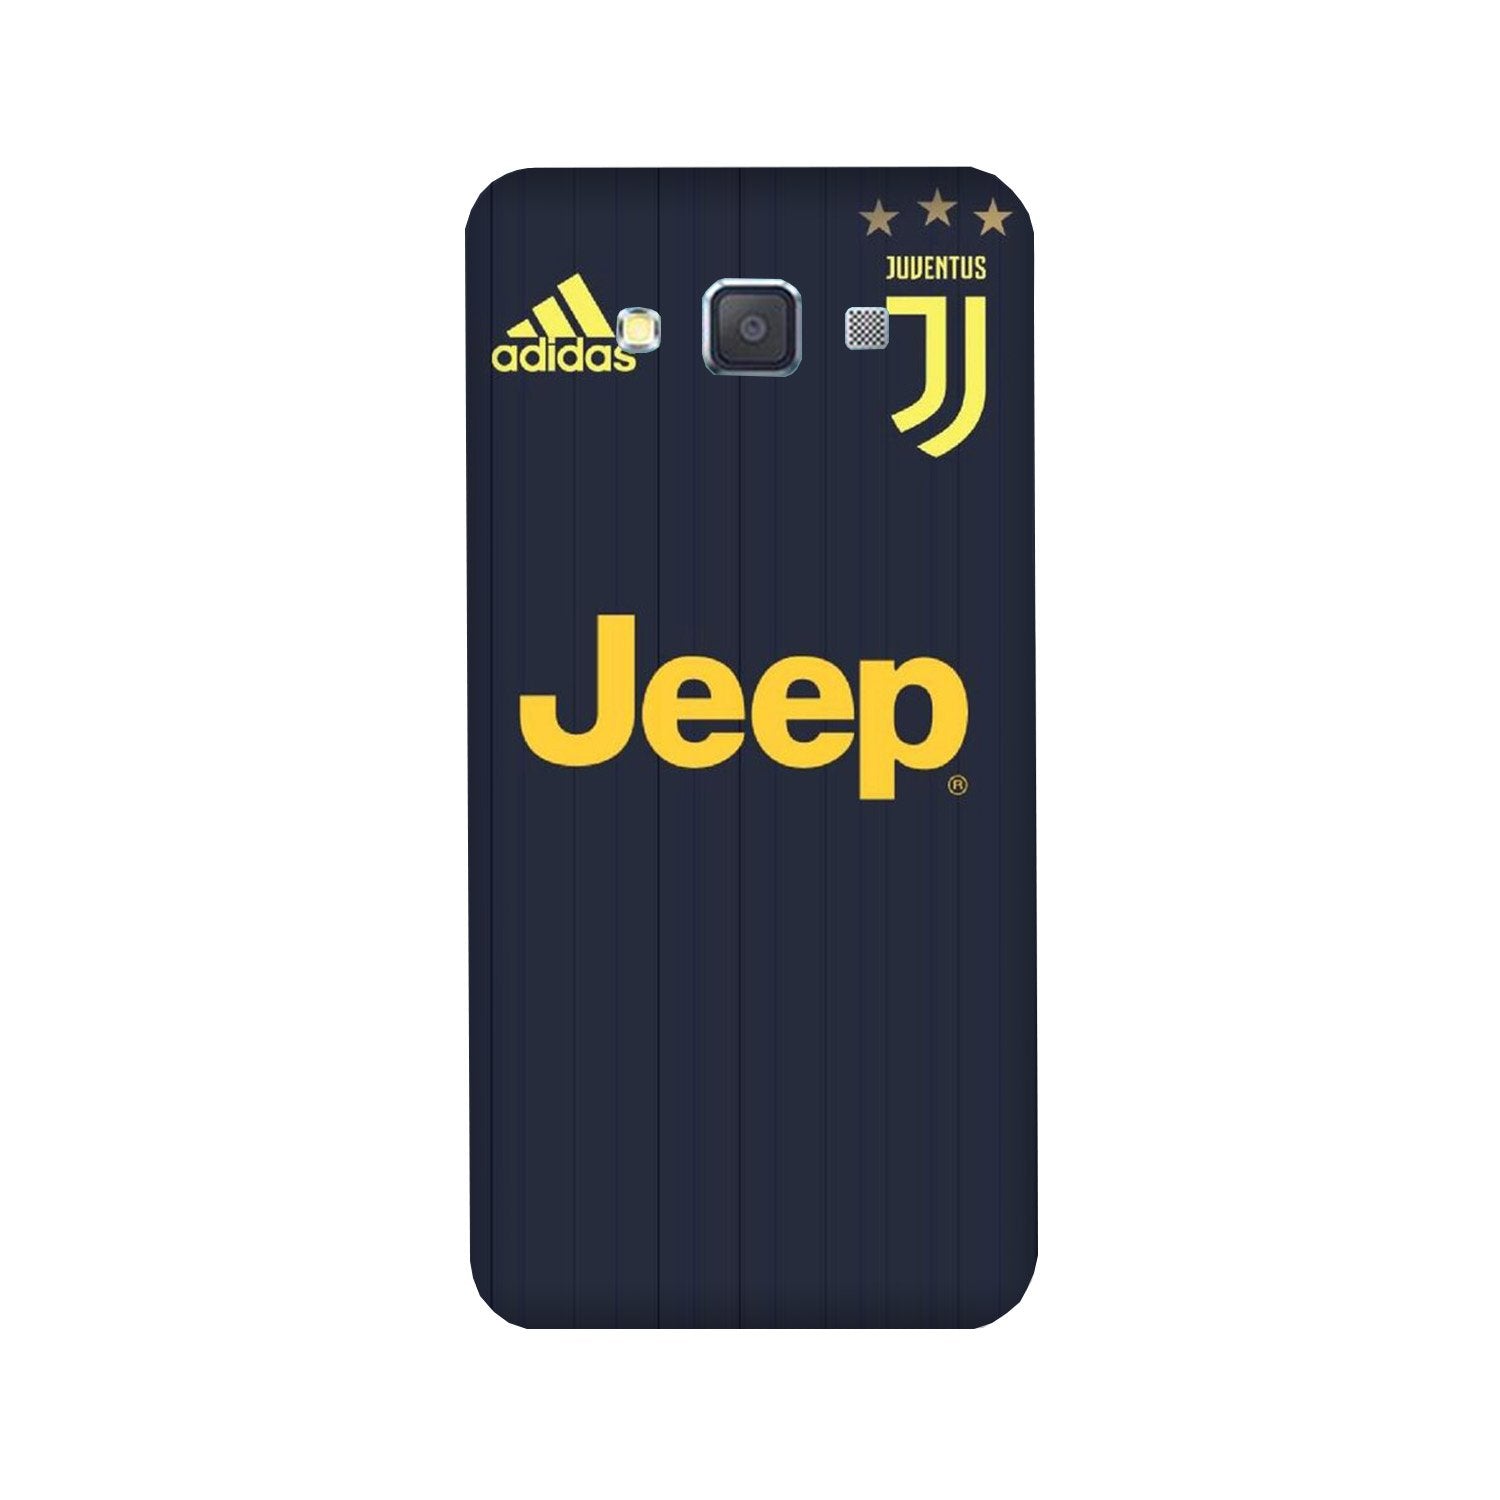 Jeep Juventus Case for Galaxy Grand Prime(Design - 161)